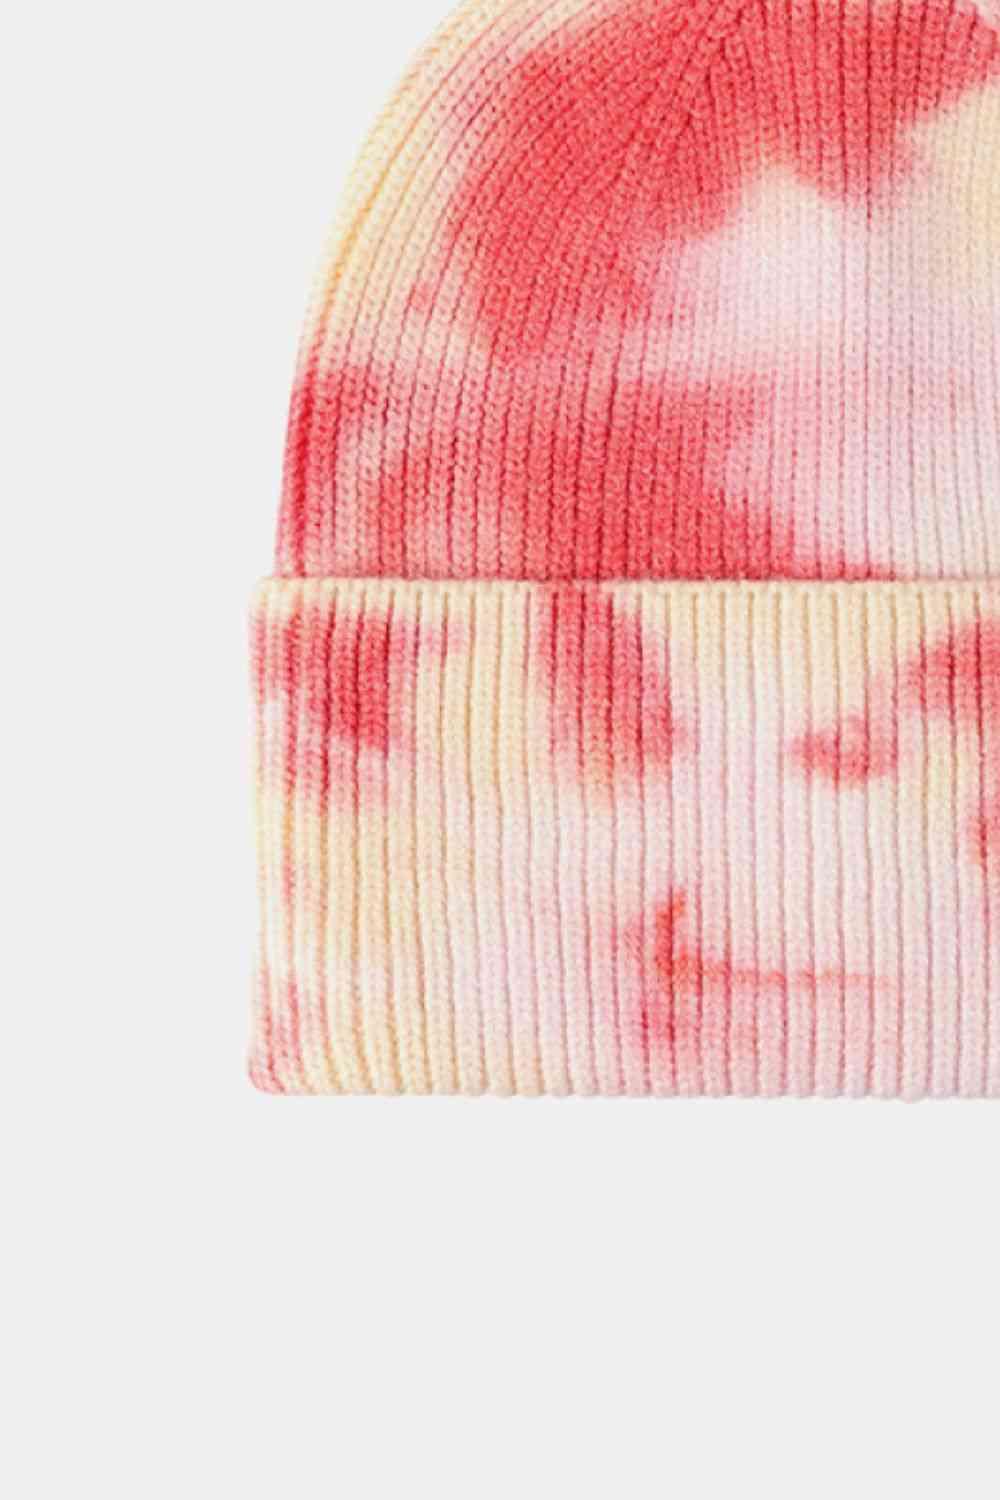 Tie-Dye Cuffed Rib-Knit Beanie Hat - Closet of Ren